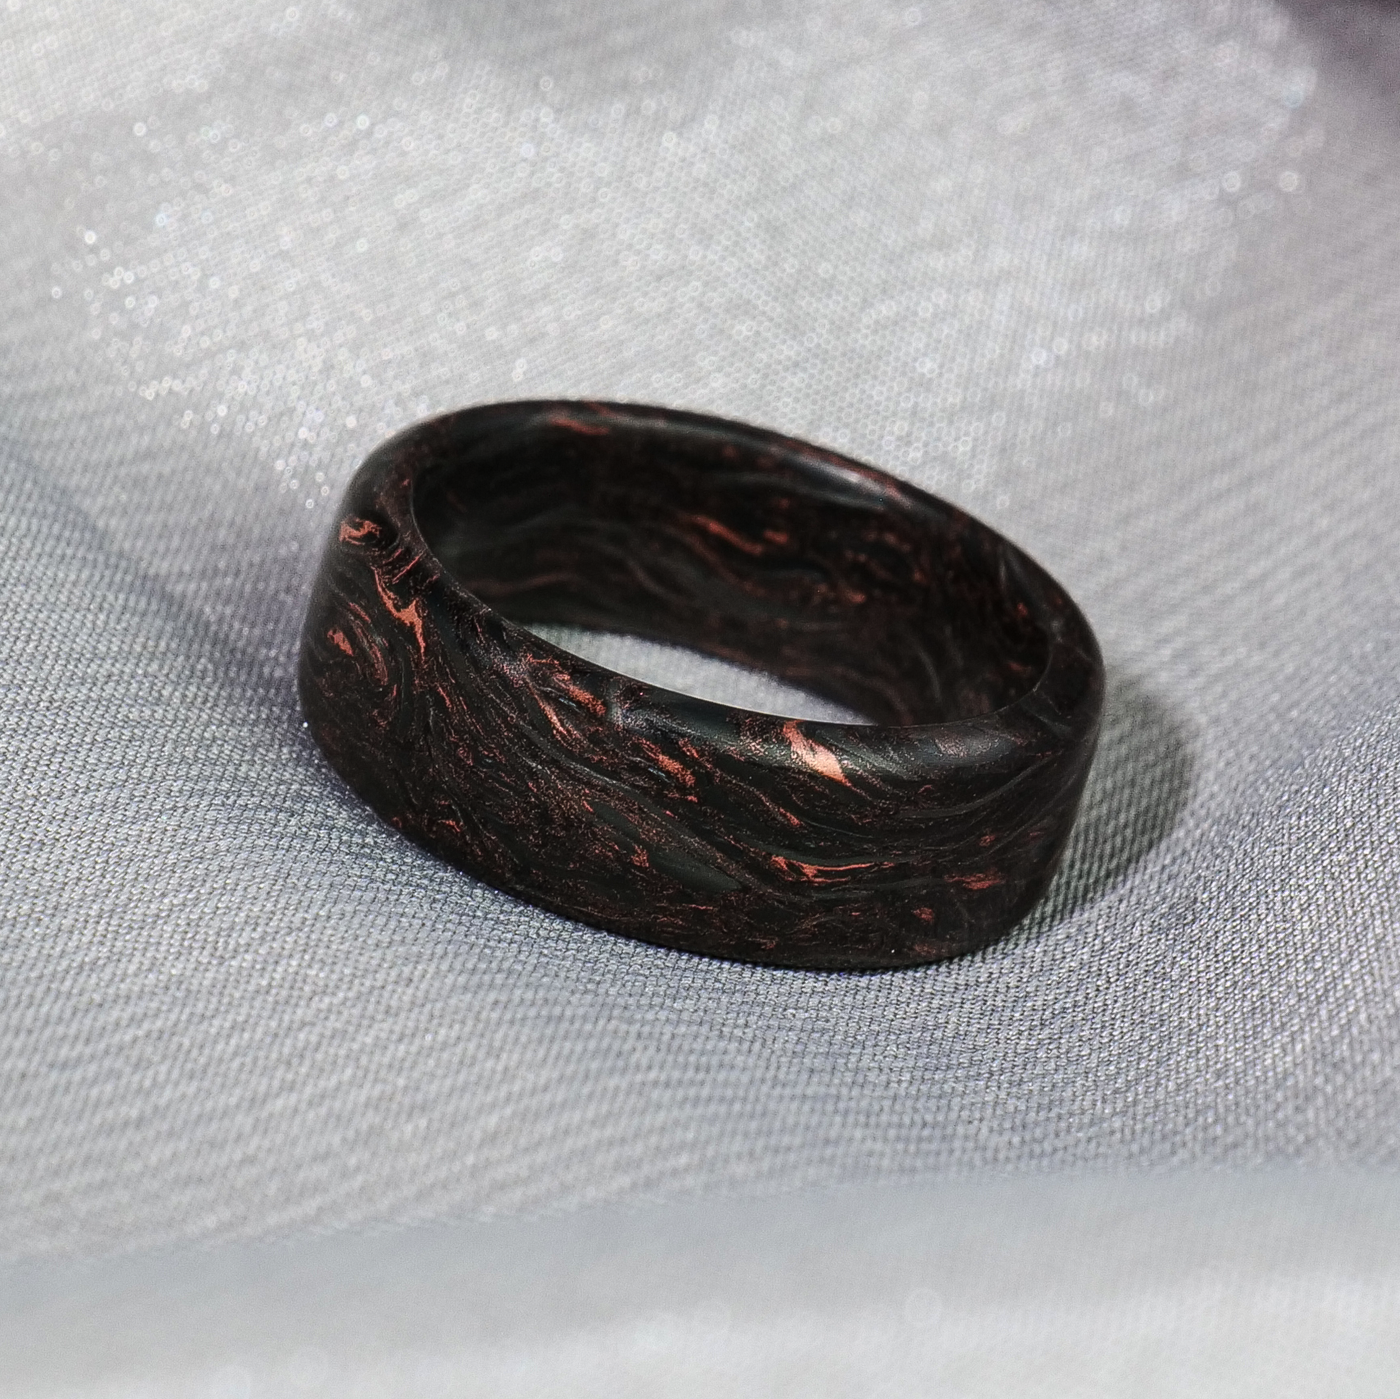 Copper Burl Carbon Fiber Ring - Patrick Adair Designs